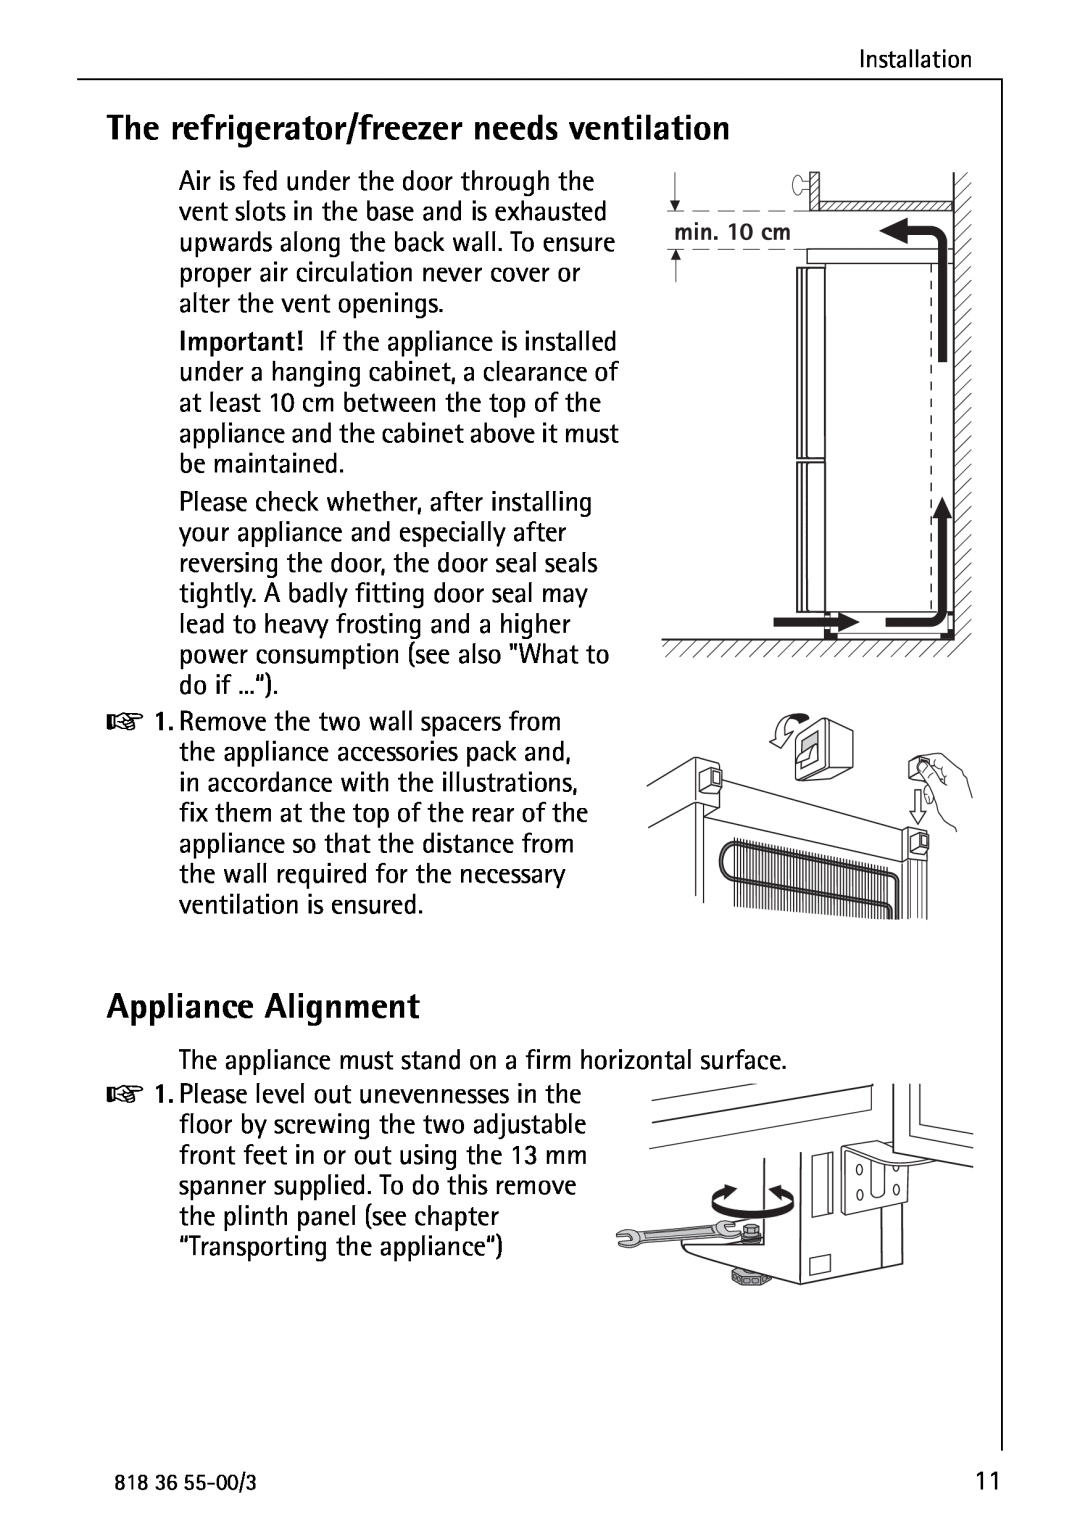 AEG 86378-KG operating instructions The refrigerator/freezer needs ventilation, Appliance Alignment 